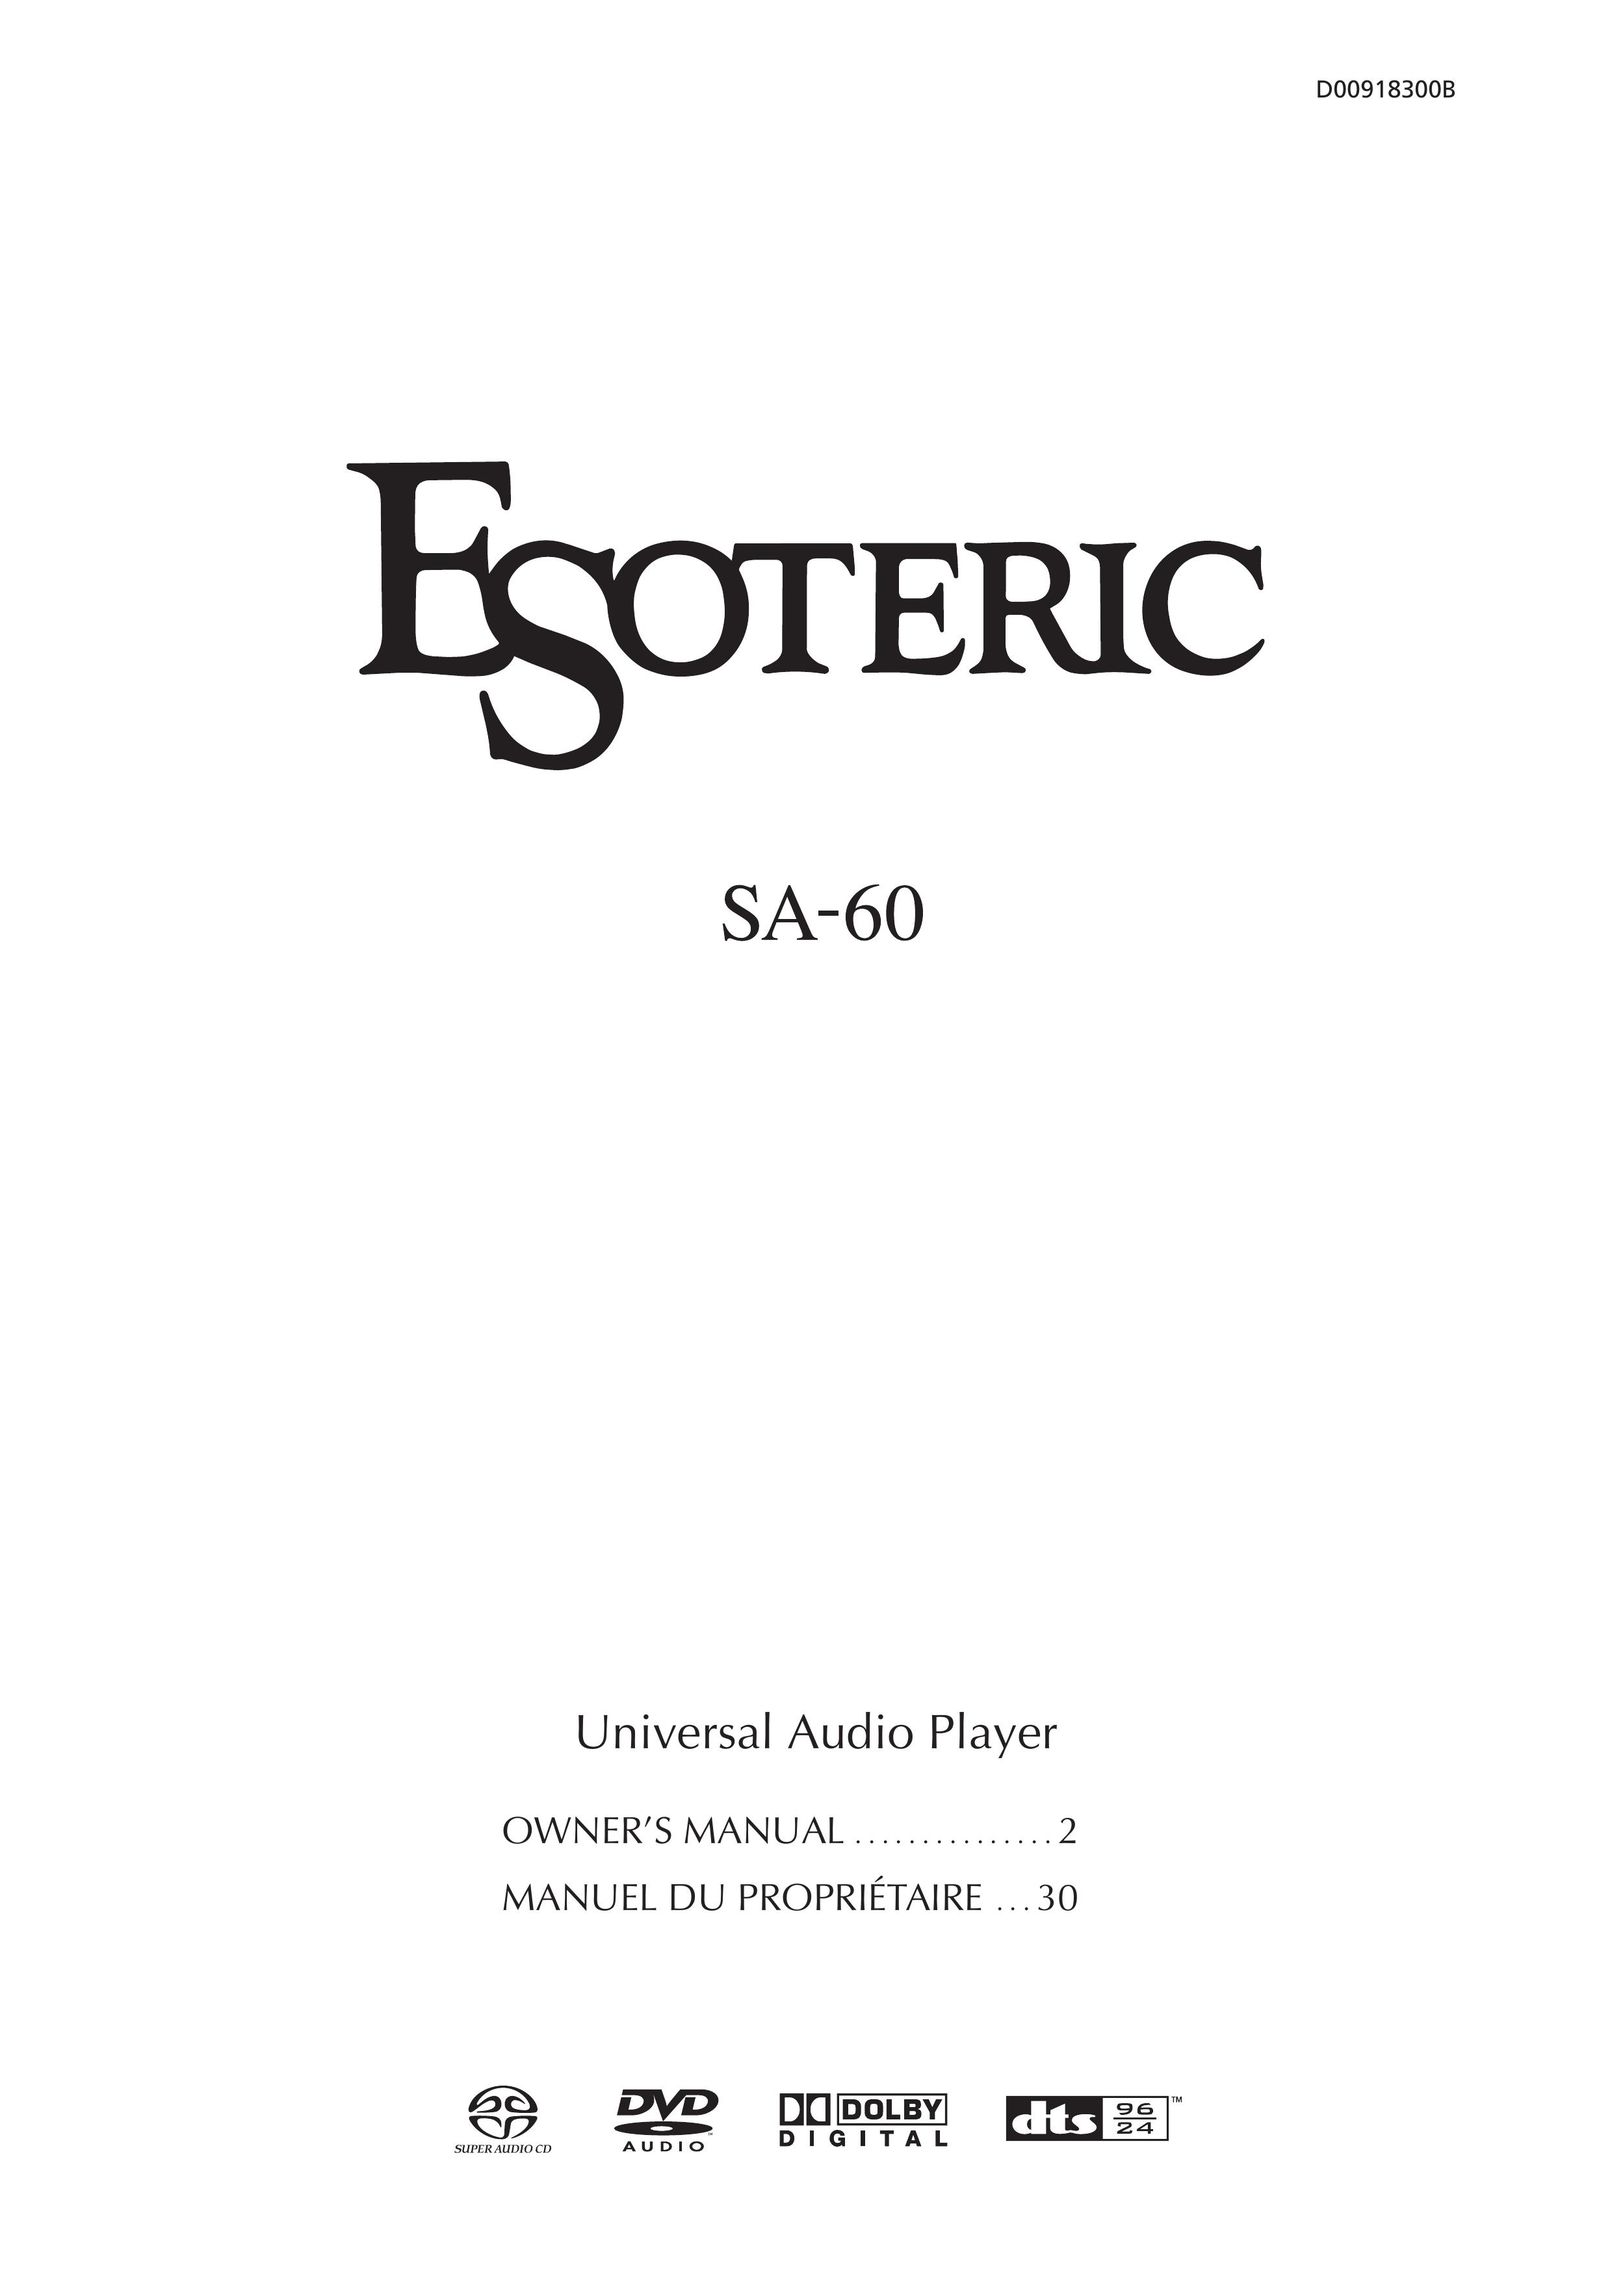 Esoteric D00918300B Universal Remote User Manual